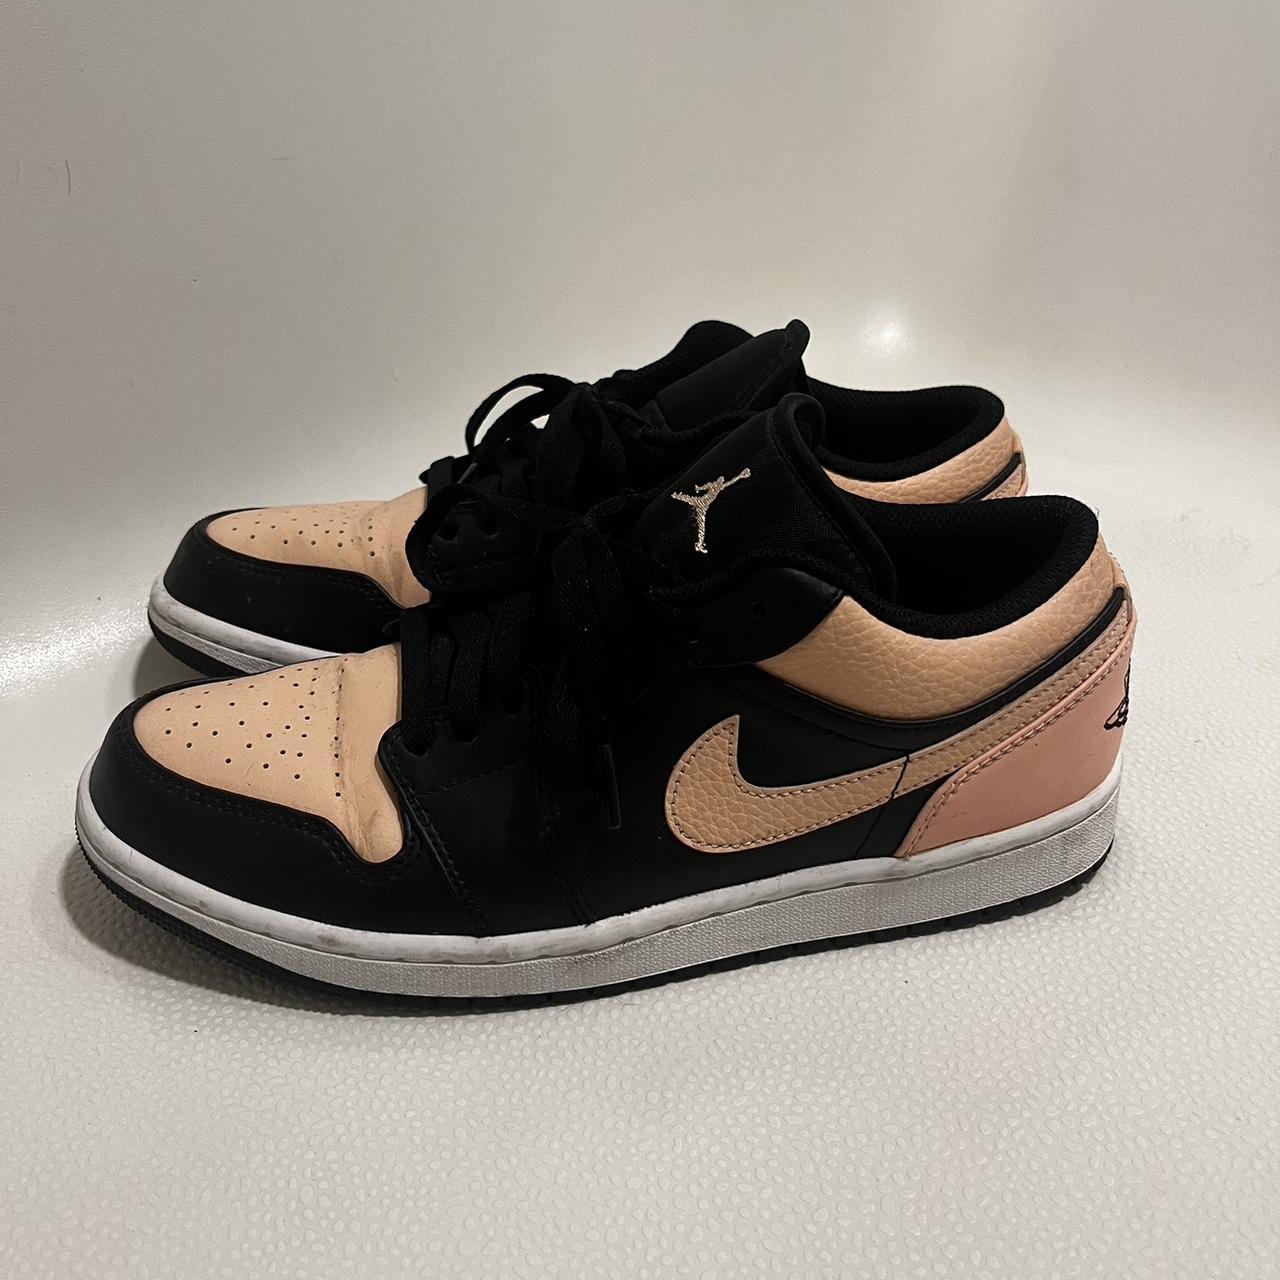 Nike Jordan 1 low pink black men’s 8.5 shoes have... - Depop